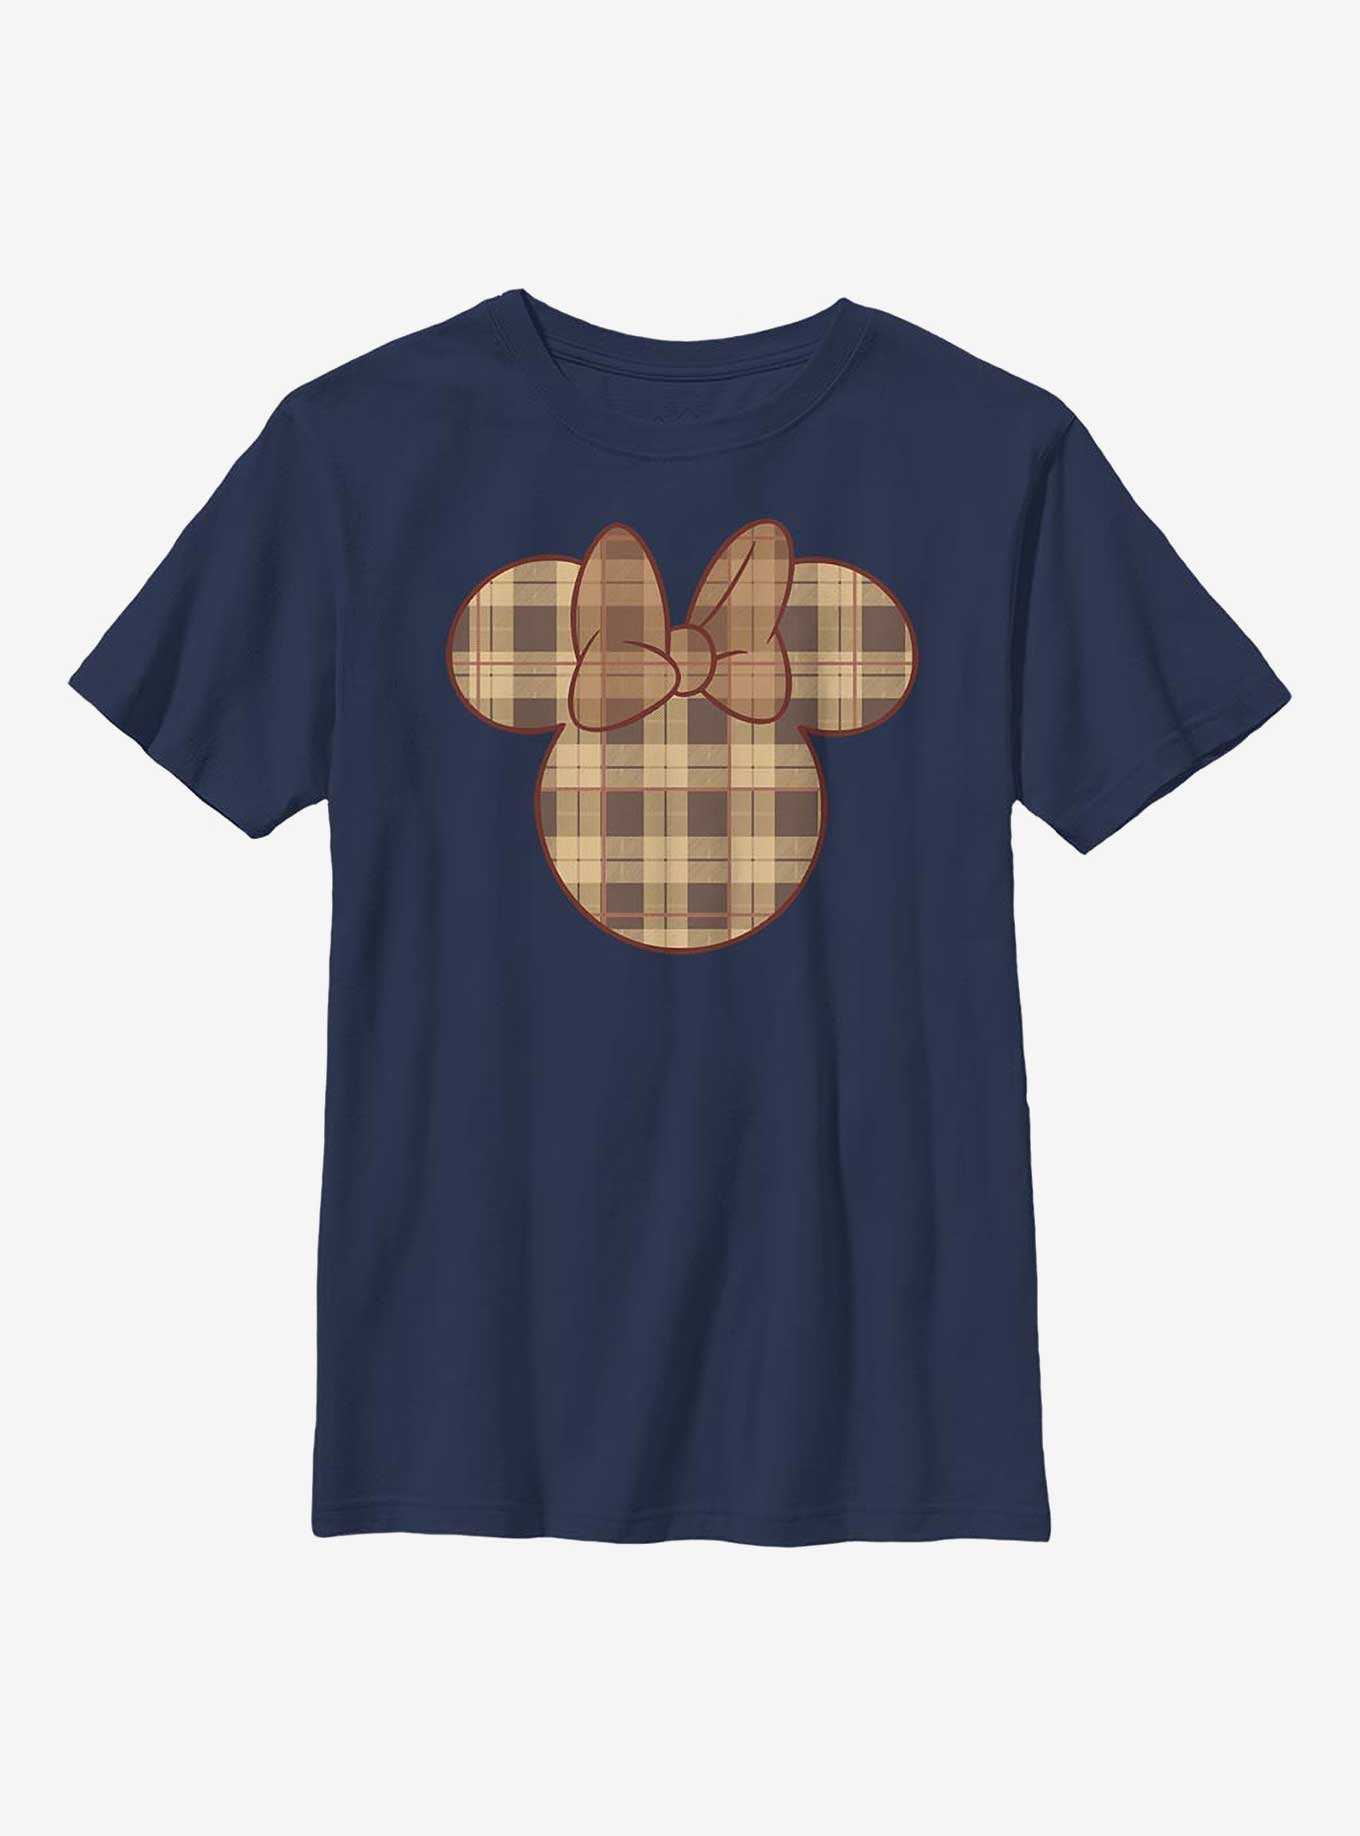 Disney Minnie Mouse Fall Plaid Minnie Youth T-Shirt, , hi-res